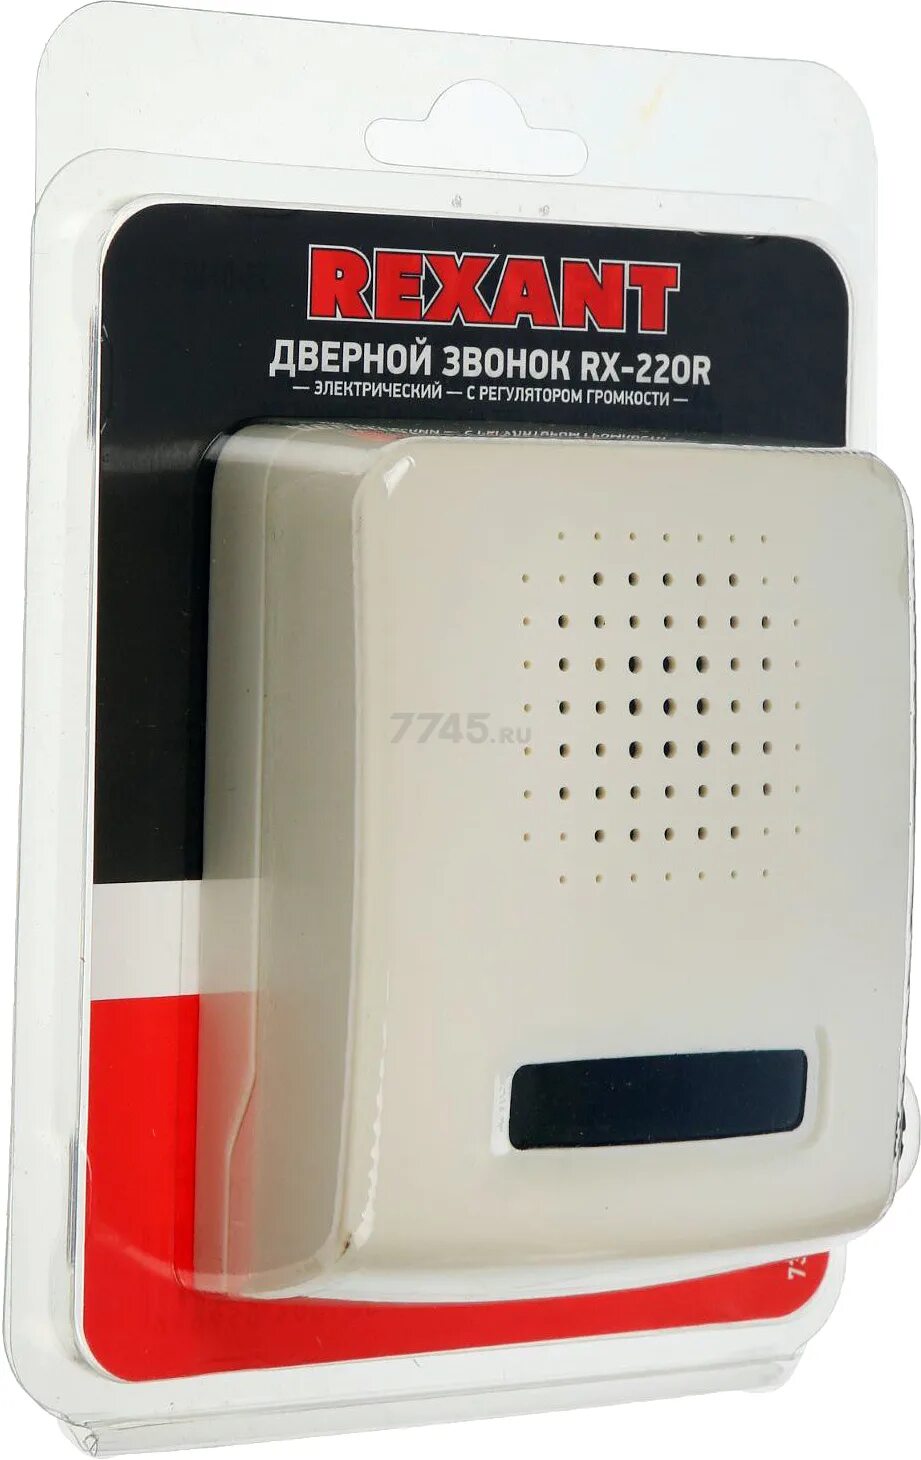 Звонок Rexant проводной 73-0110. Звонок электрический 220в Rexant 9987048. Электрический звонок RX-220 Rexant. Дверной звонок Rexant (73-0110) 220в с регулятором громкости. Звонок 220 купить